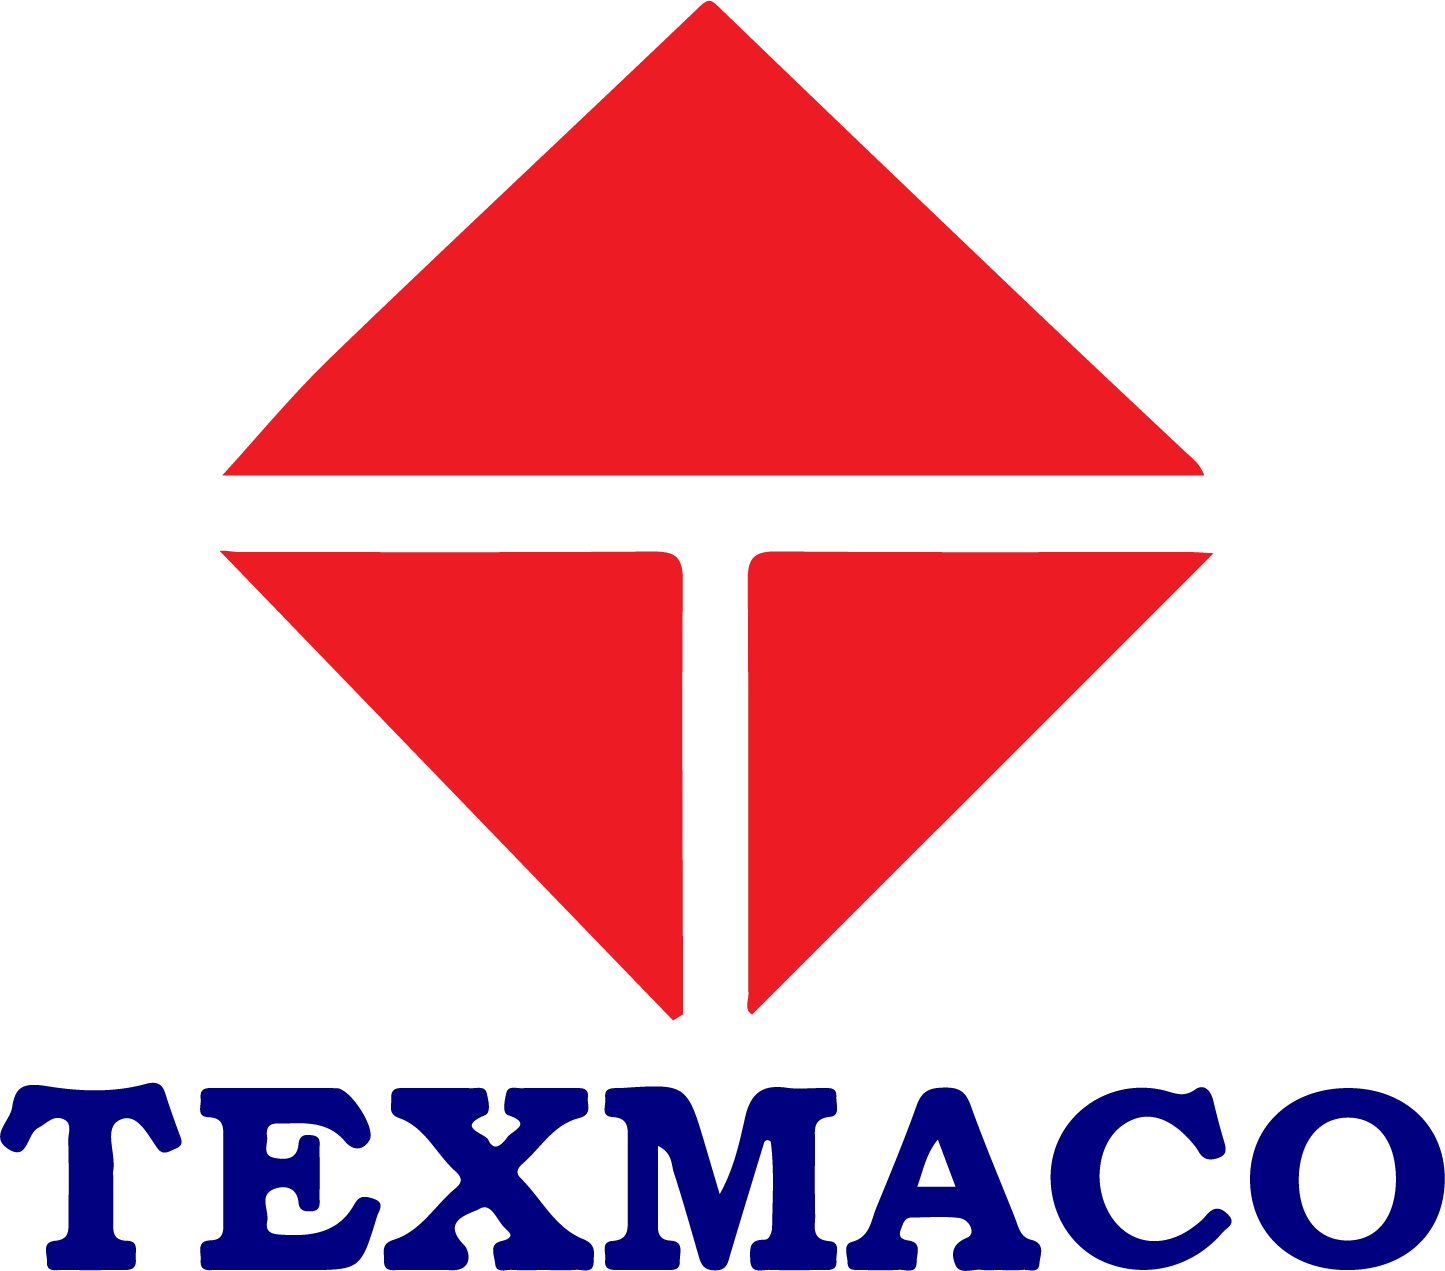 Texmaco Rail & Engineering logo large (transparent PNG)